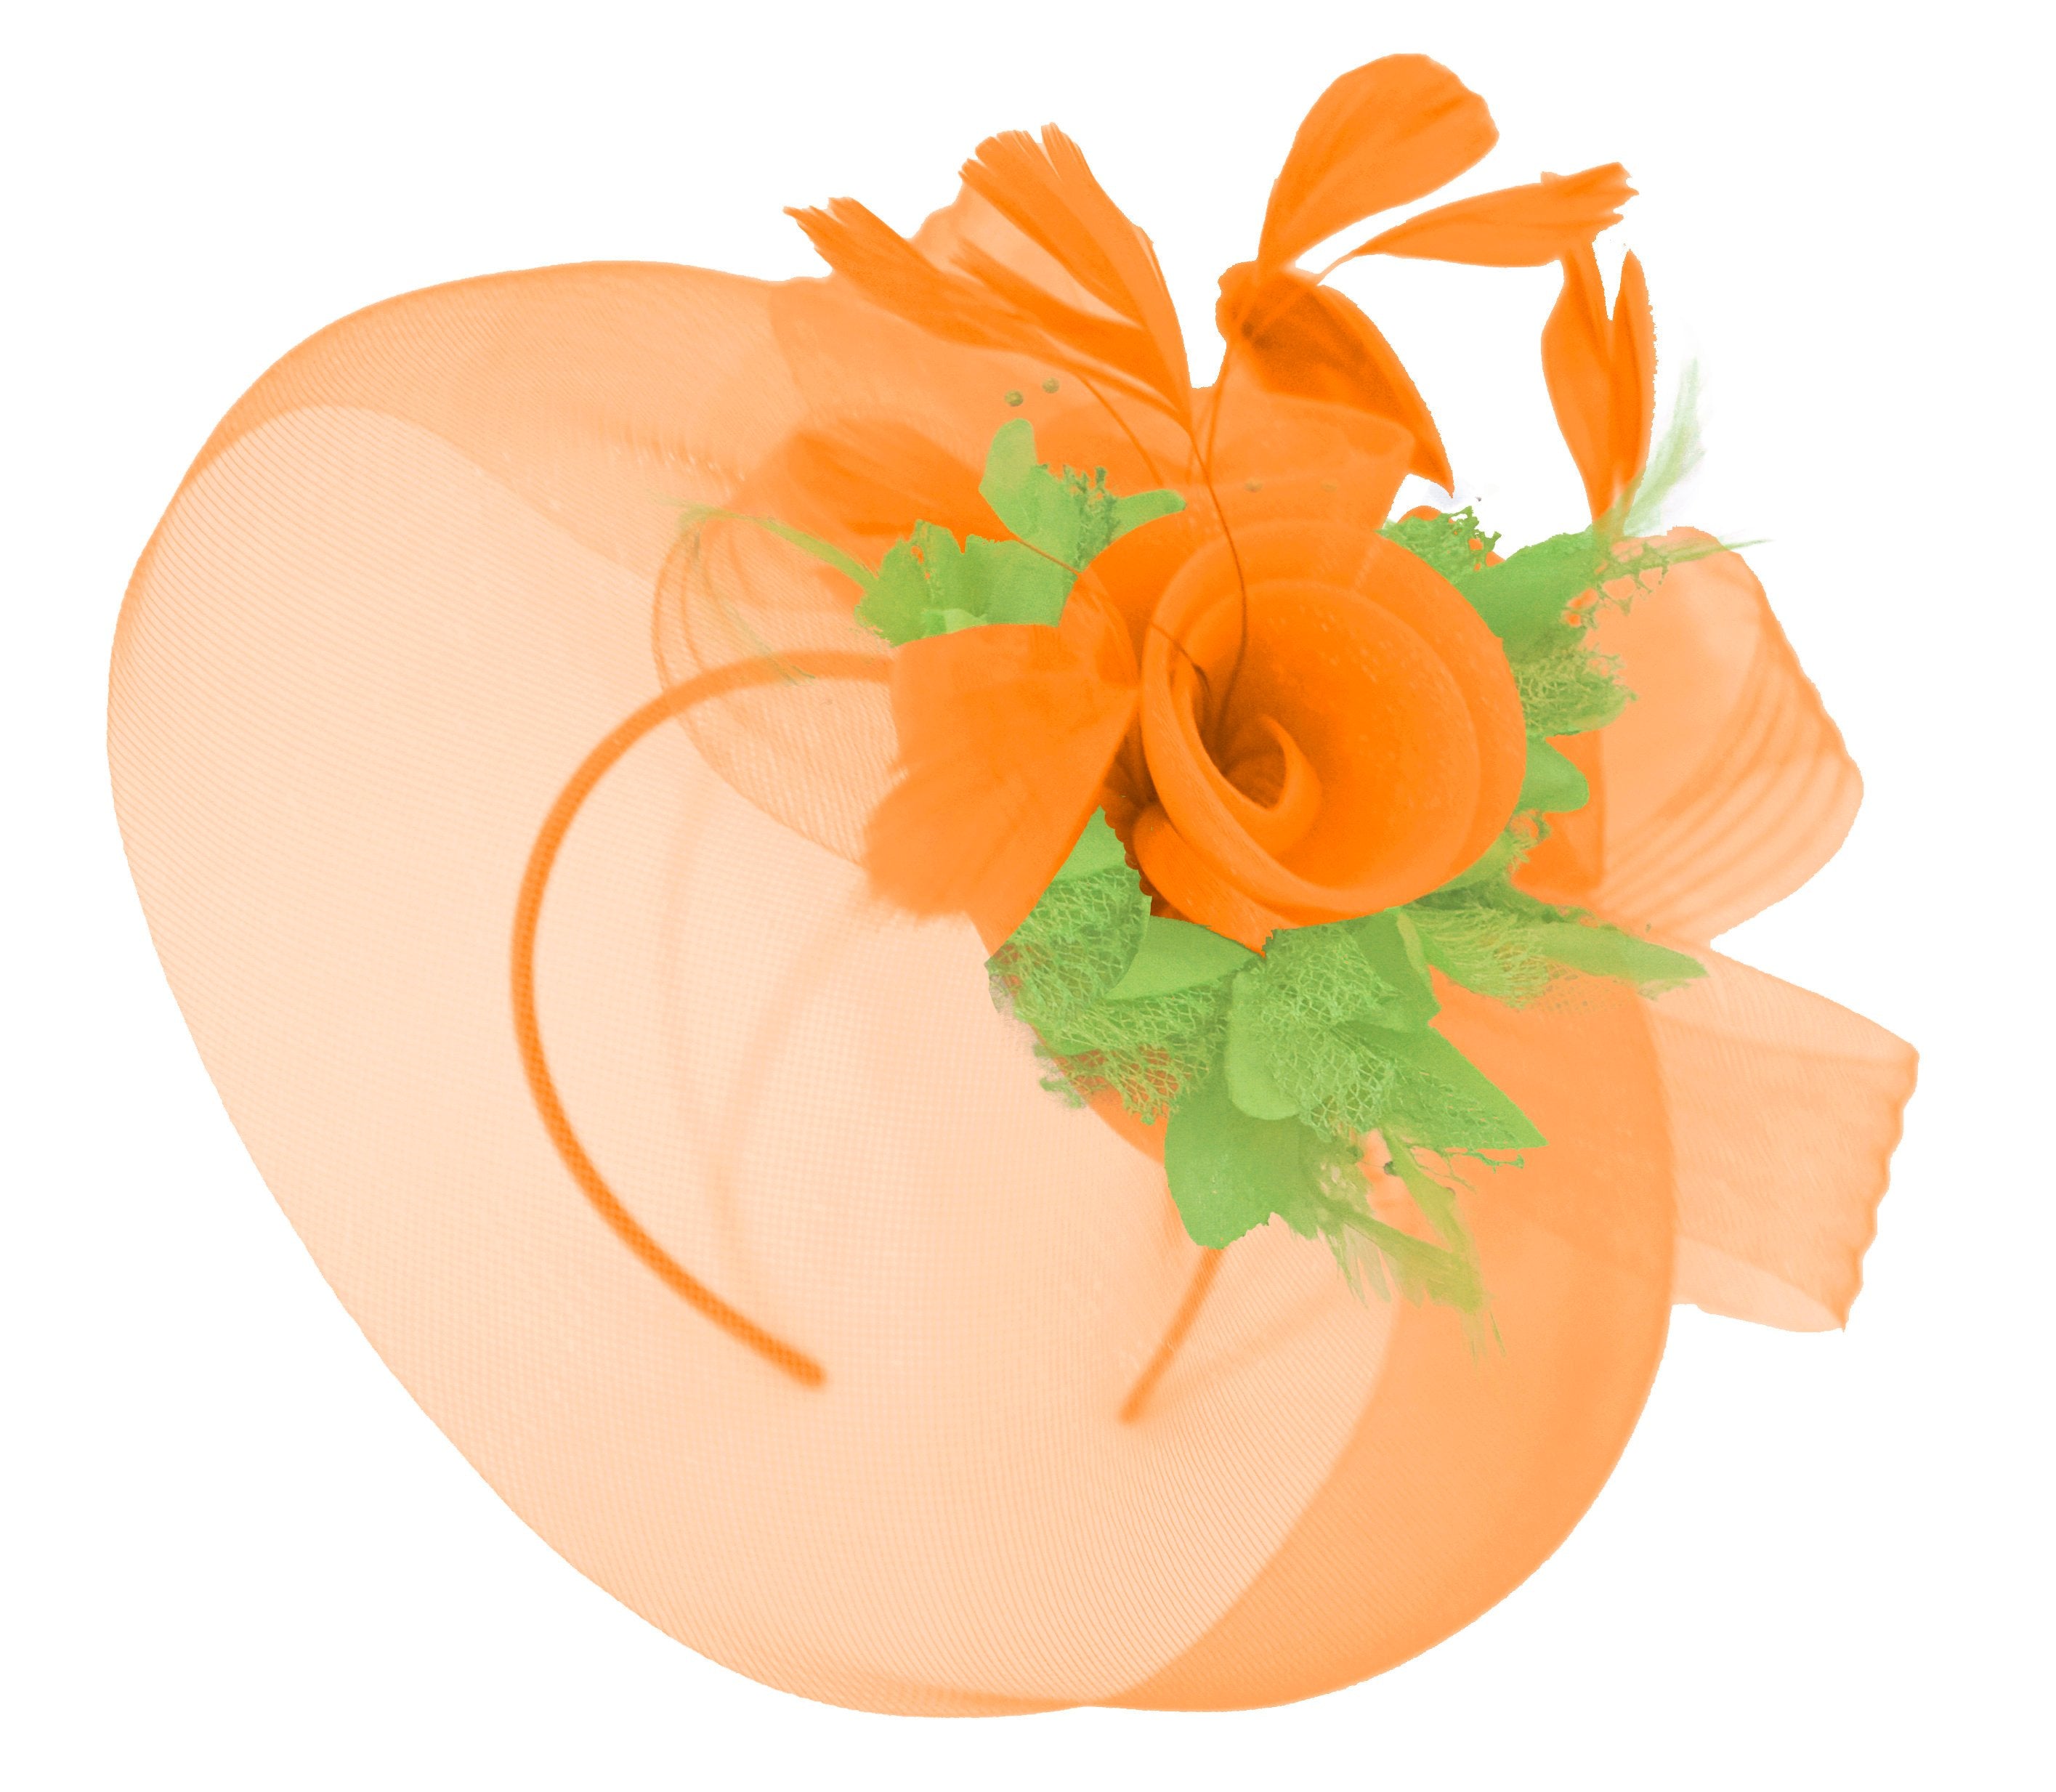 Caprilite Orange and Lime Green Fascinator Hat Veil Net Hair Clip Ascot Derby Races Wedding Headband Feather Flower